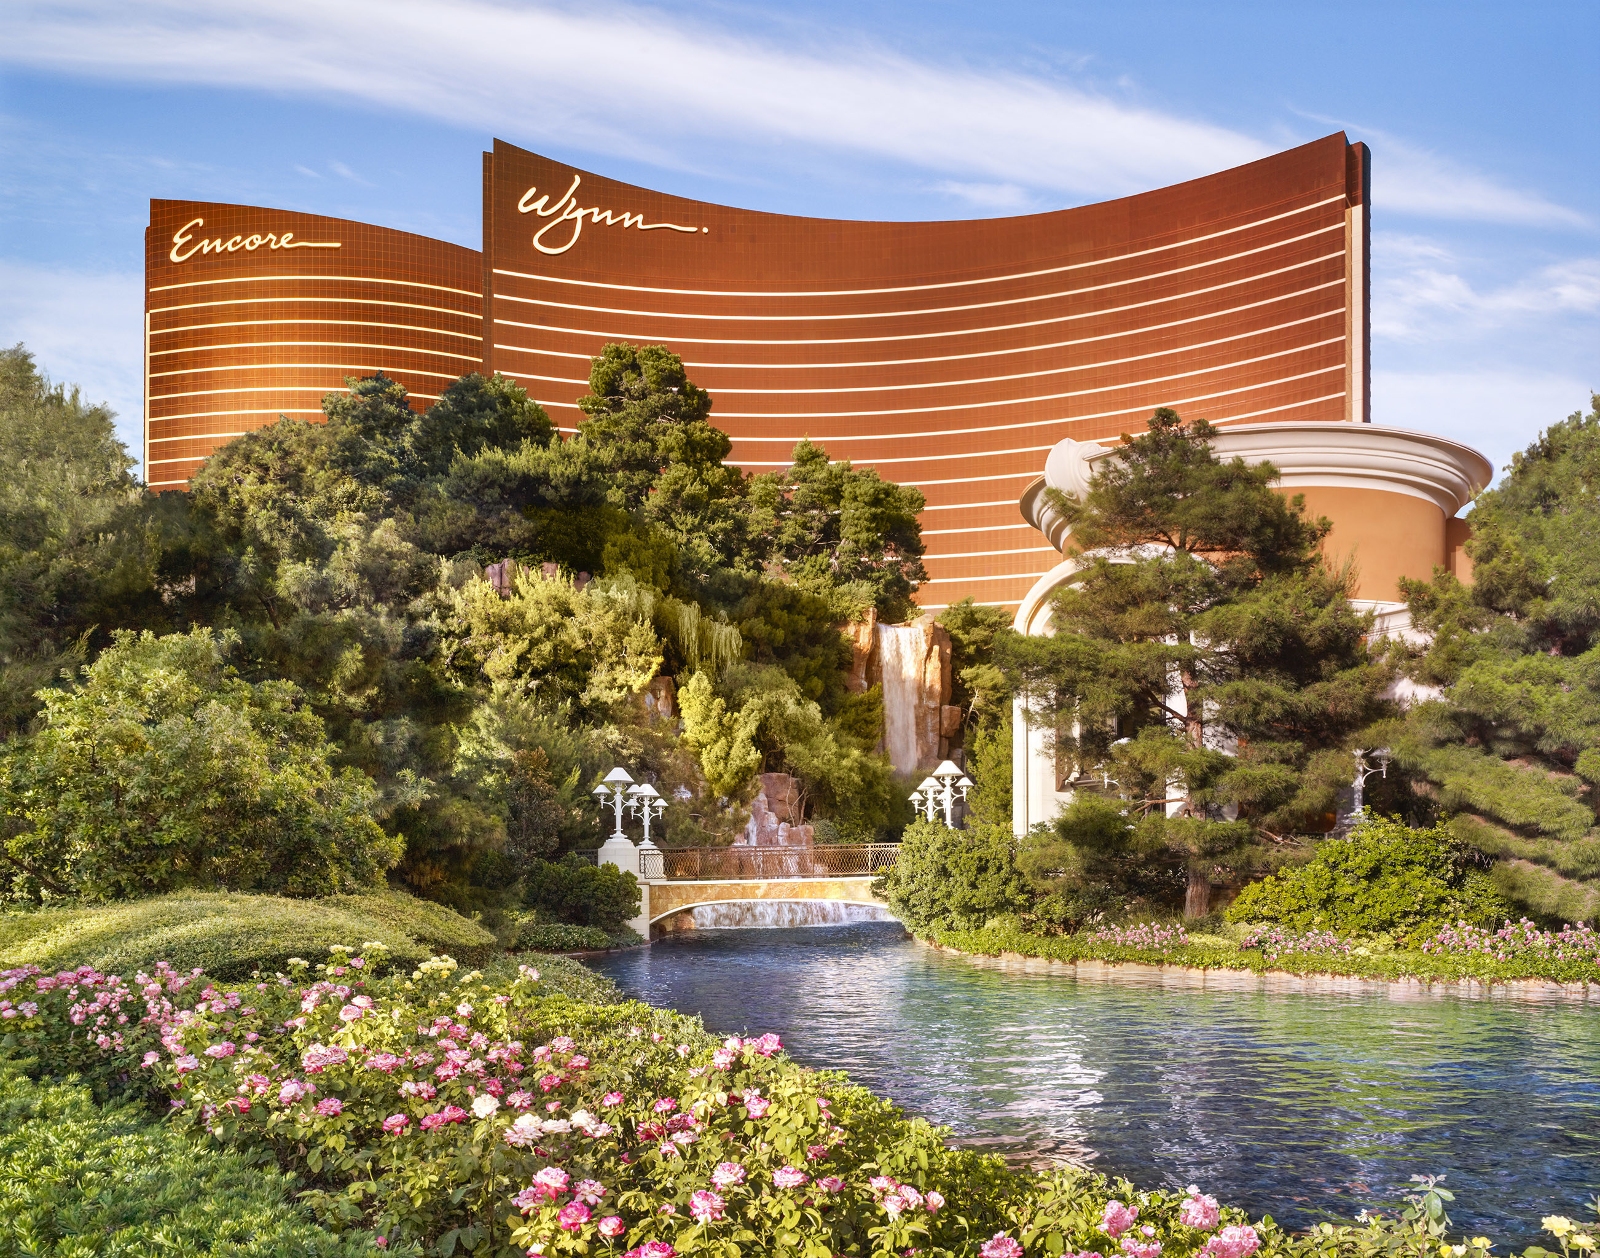 Wynn Las Vegas adds Amazon Echo to all hotel rooms 